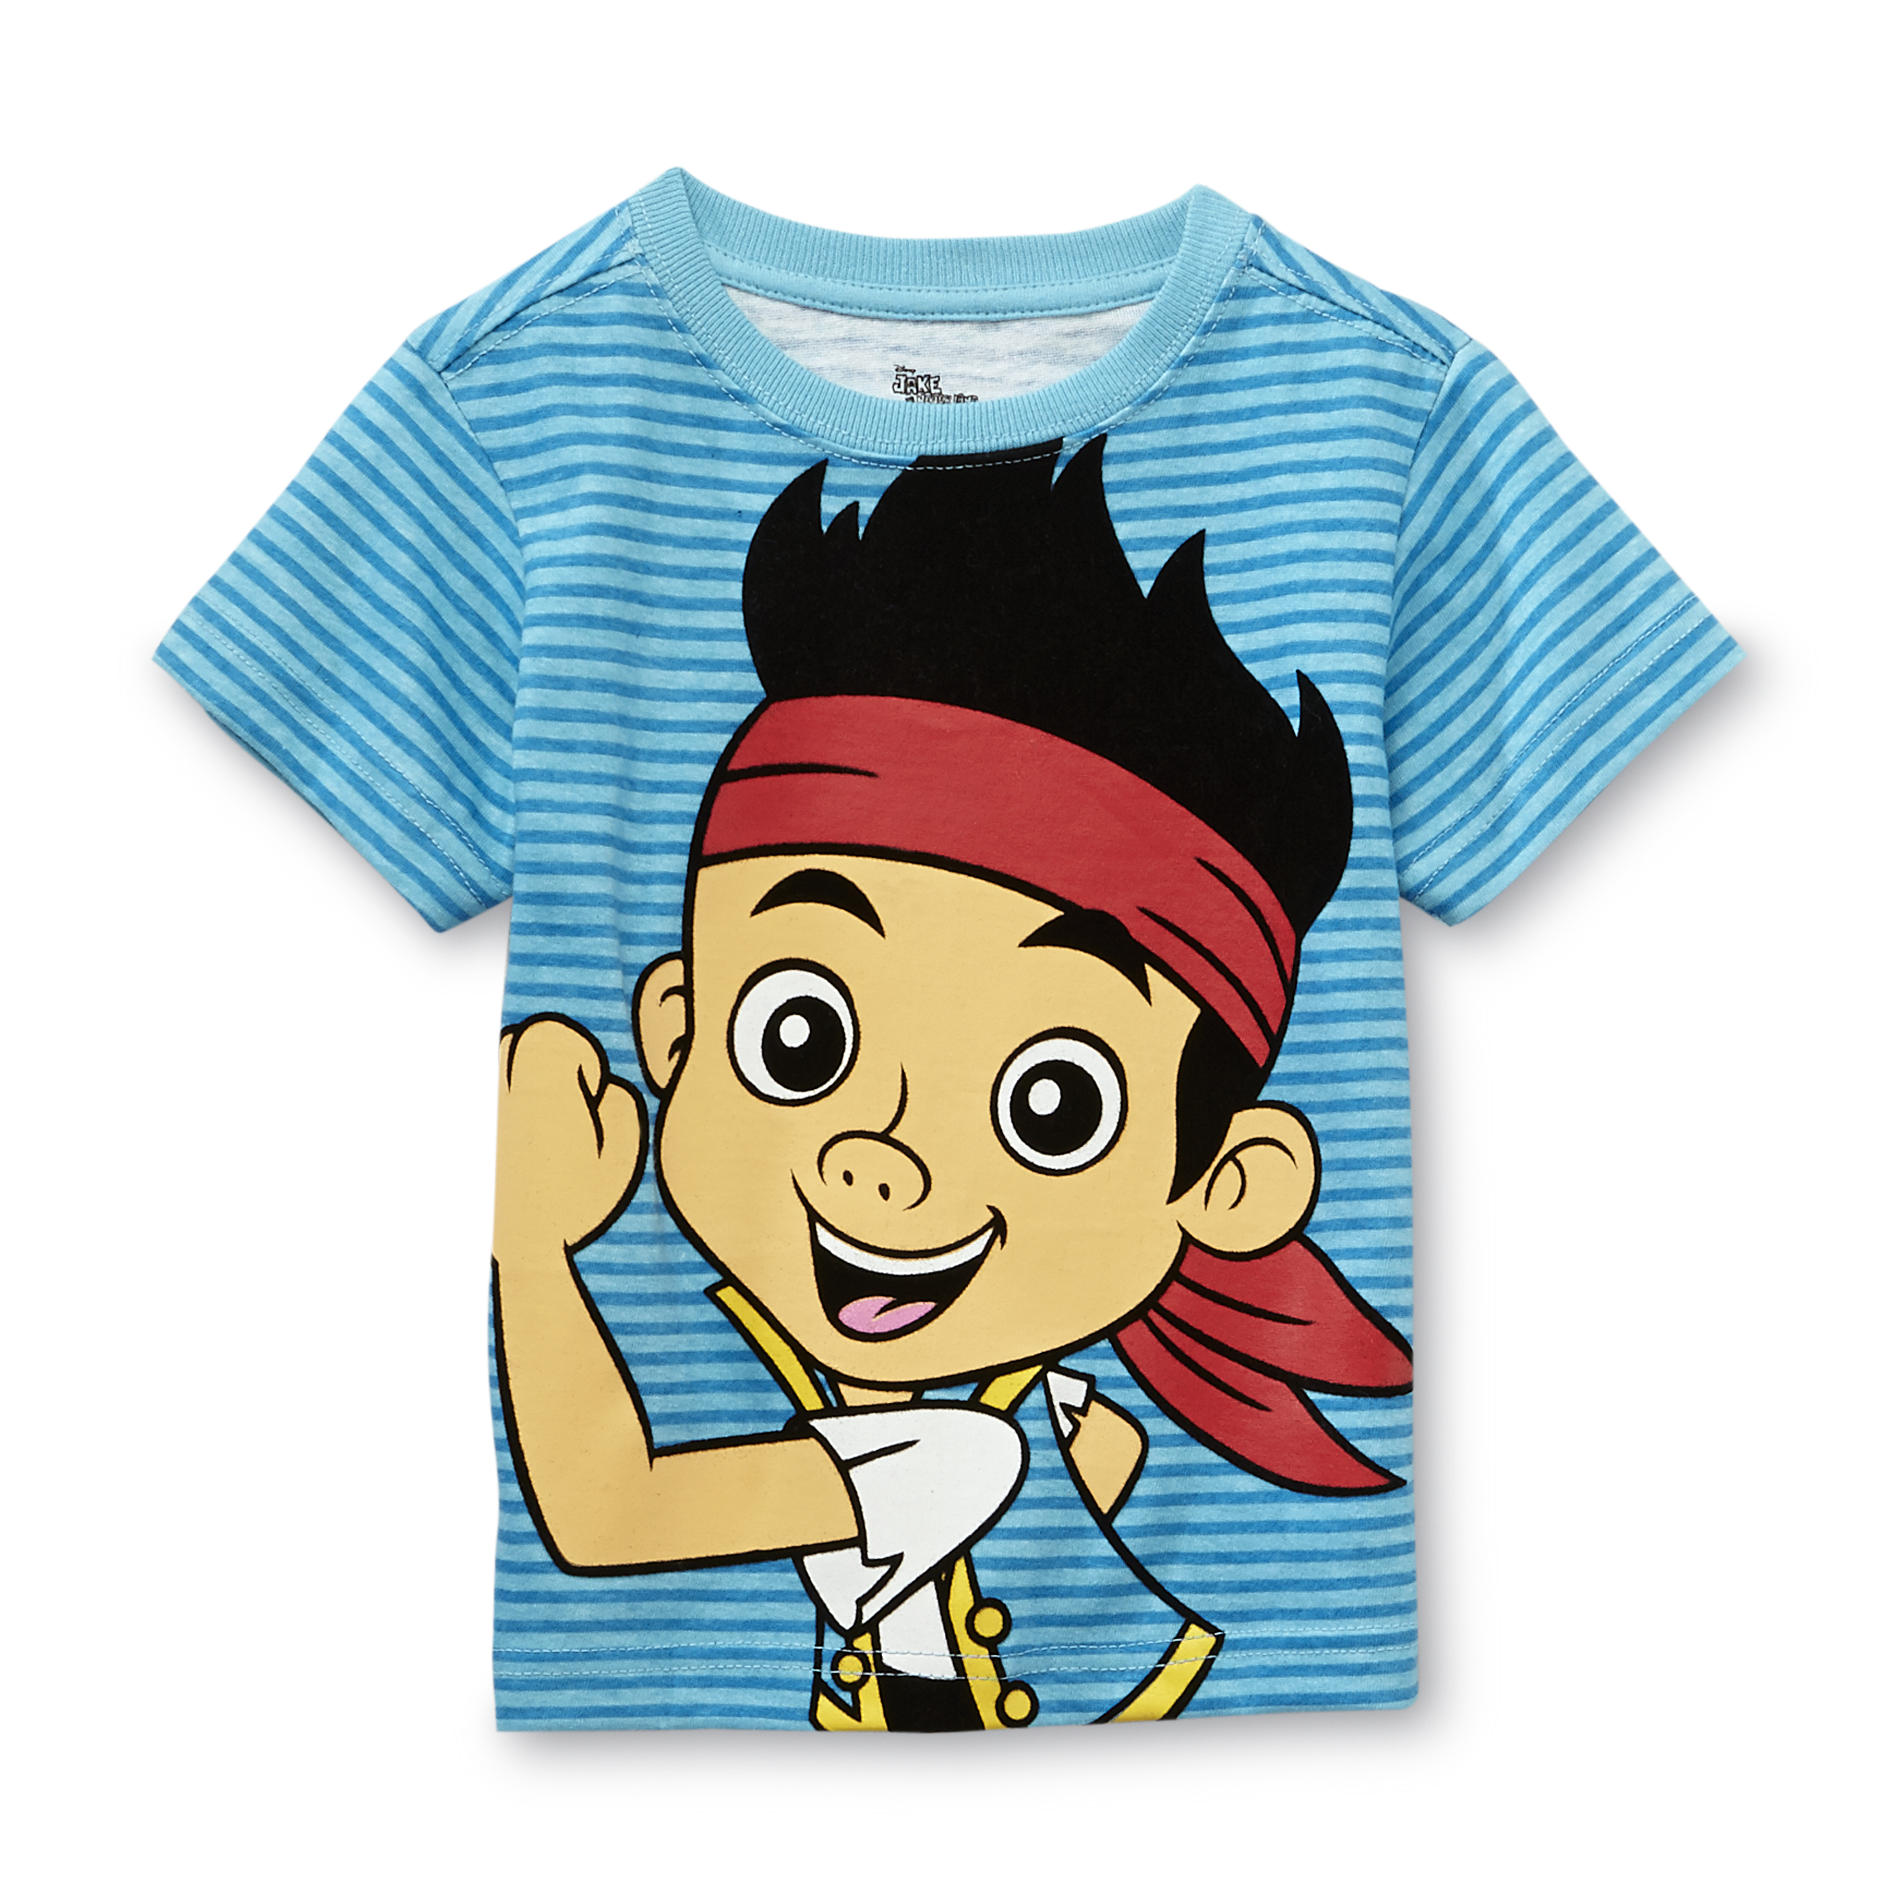 Disney Jake & The Never Land Pirates Infant's T-Shirt - Striped